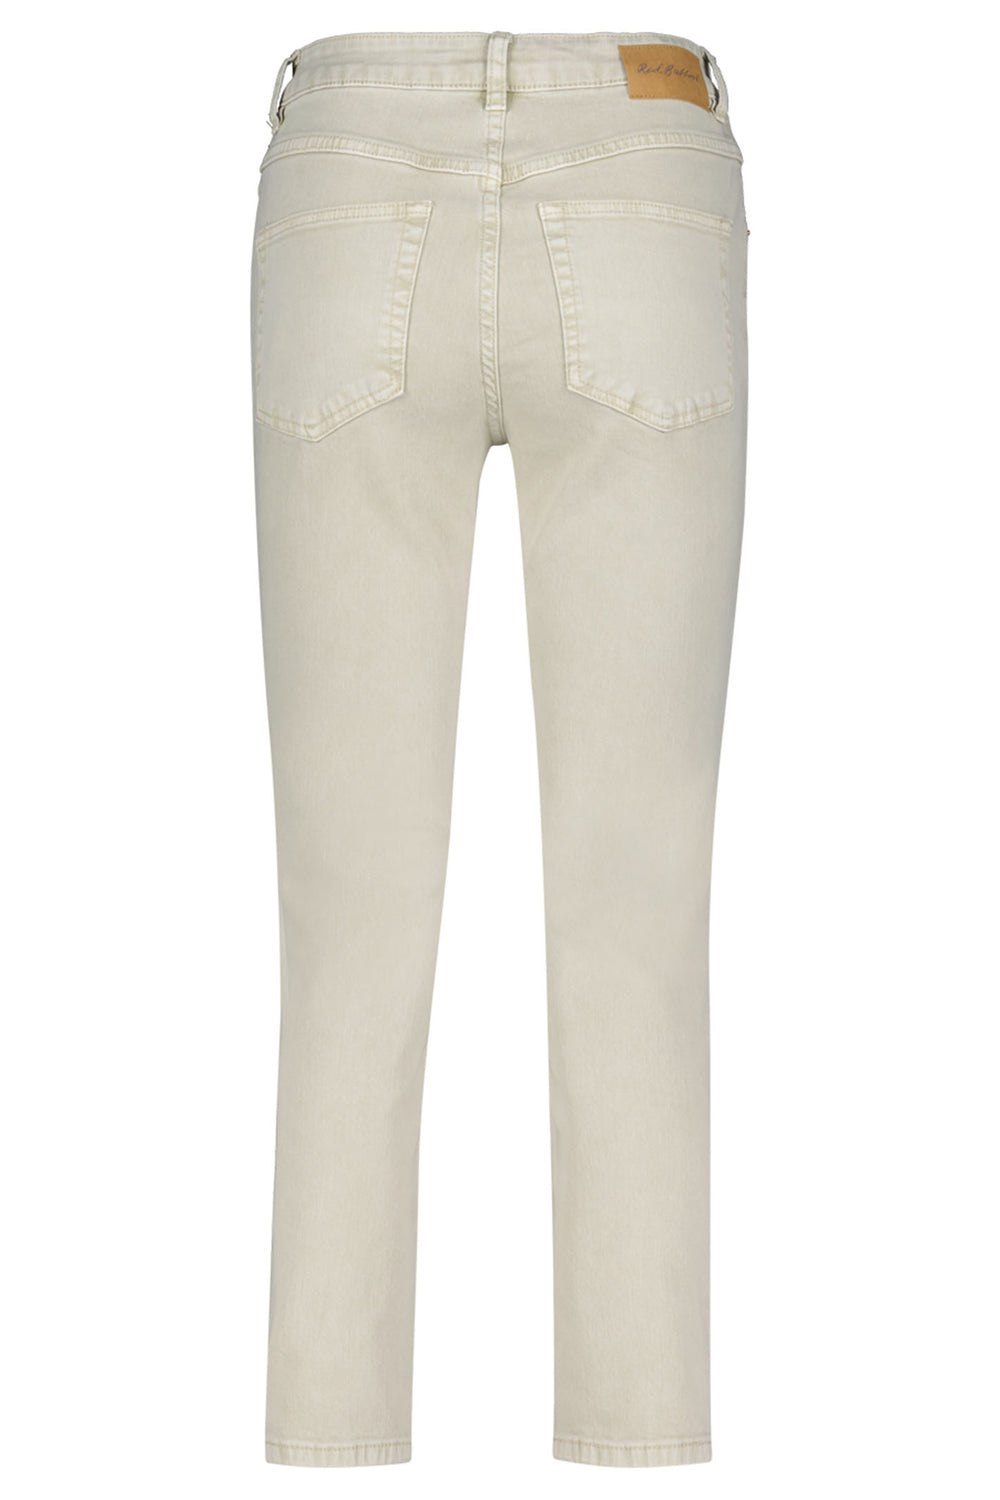 Red Button SRB4157 Tara Kit Stone Denim Jeans 27inch - Olivia Grace Fashion